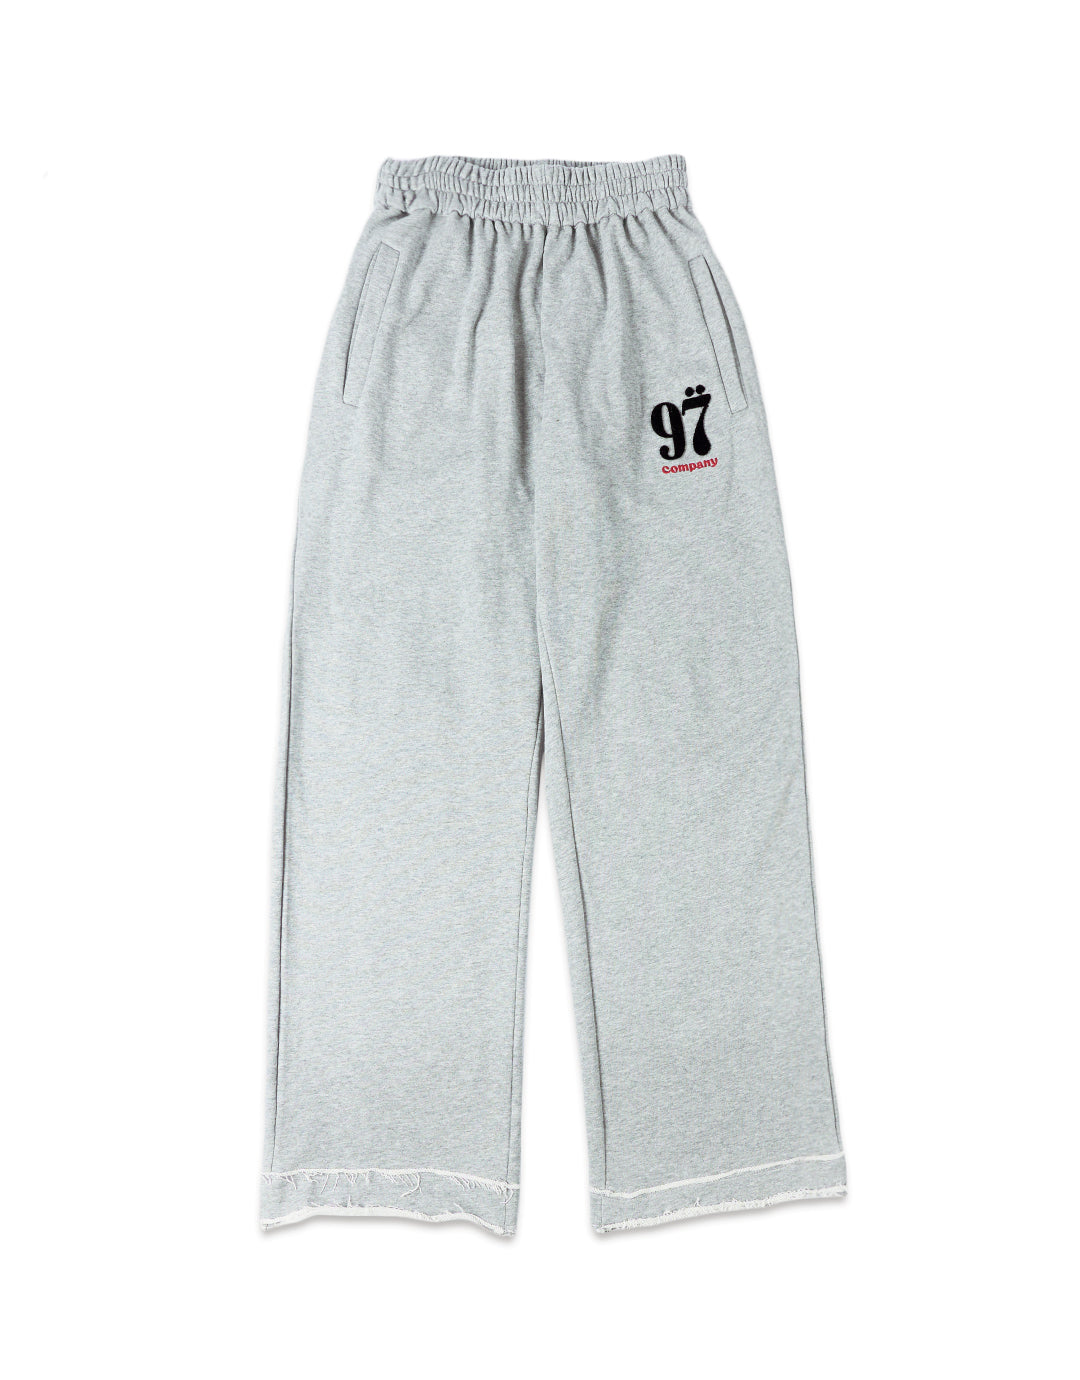 1997shell Stock Logo Sweatpants(Grey)